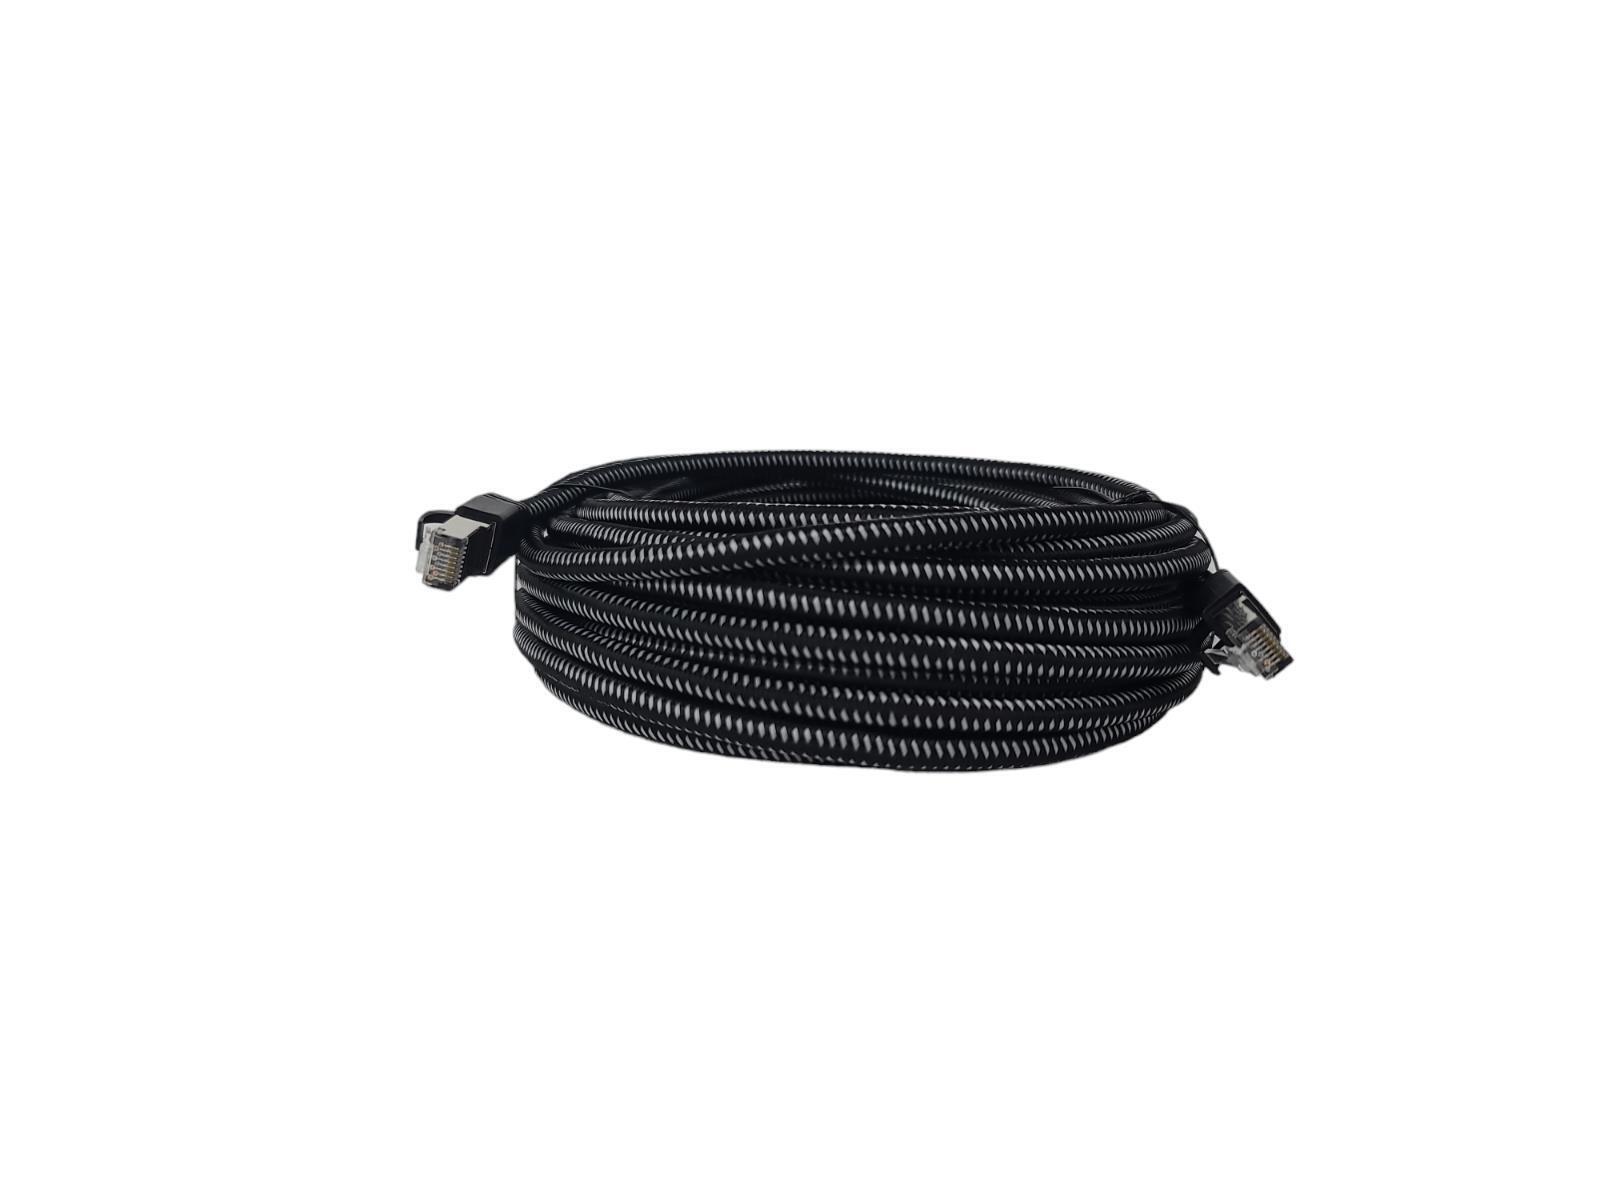 Lot of 5. 50ft Amazon Basics Braided RJ45 Cat-7 Gigabit Ethernet Patch Cable